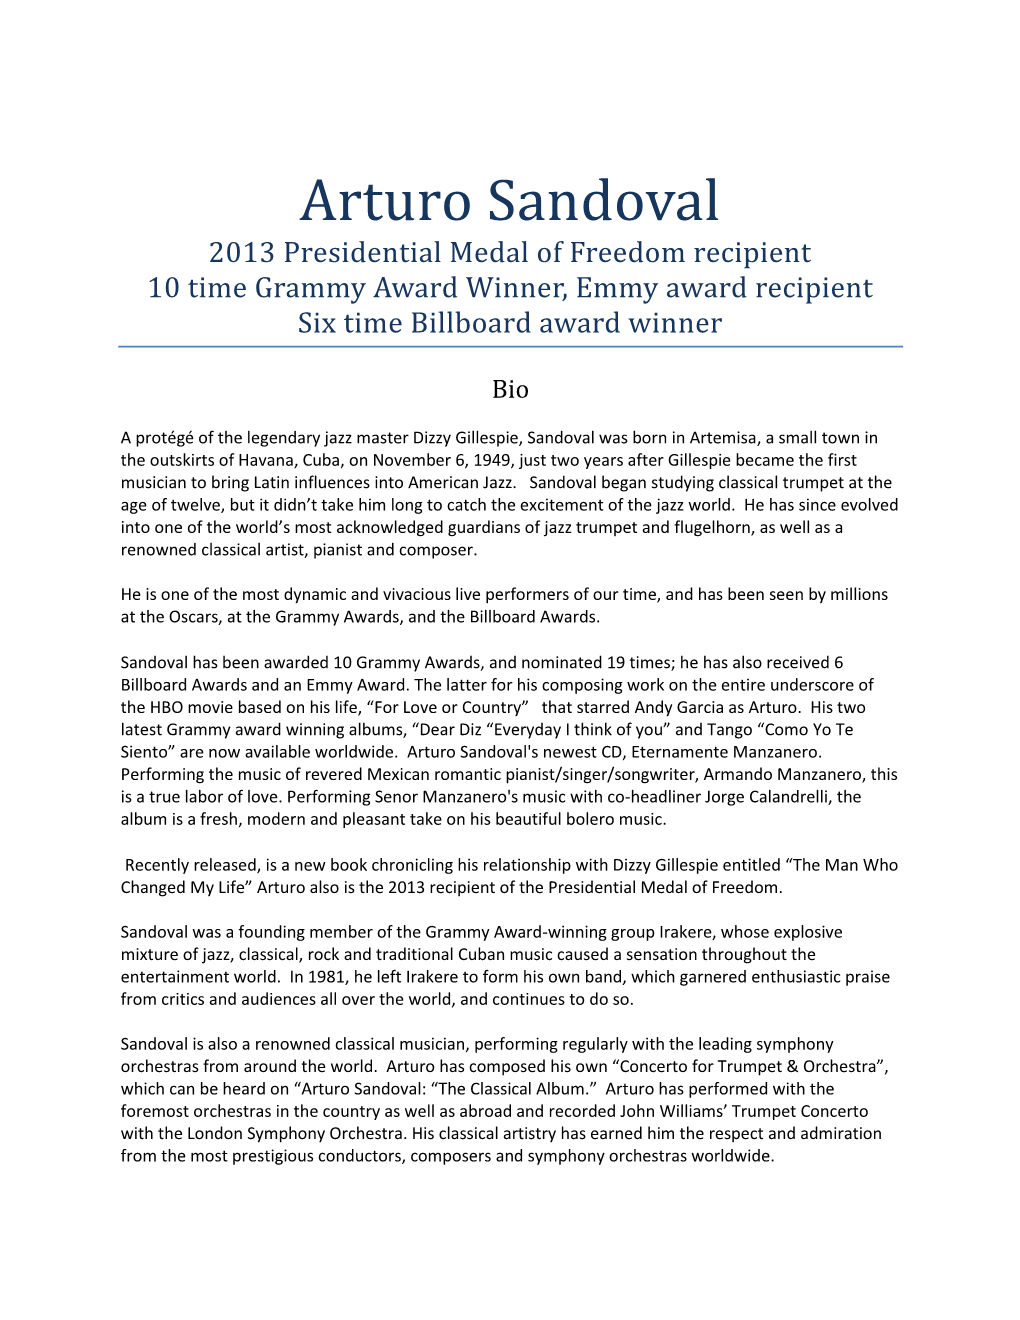 Arturo Sandoval 2013 Presidential Medal of Freedom Recipient 10 Time Grammy Award Winner, Emmy Award Recipient Six Time Billboard Award Winner